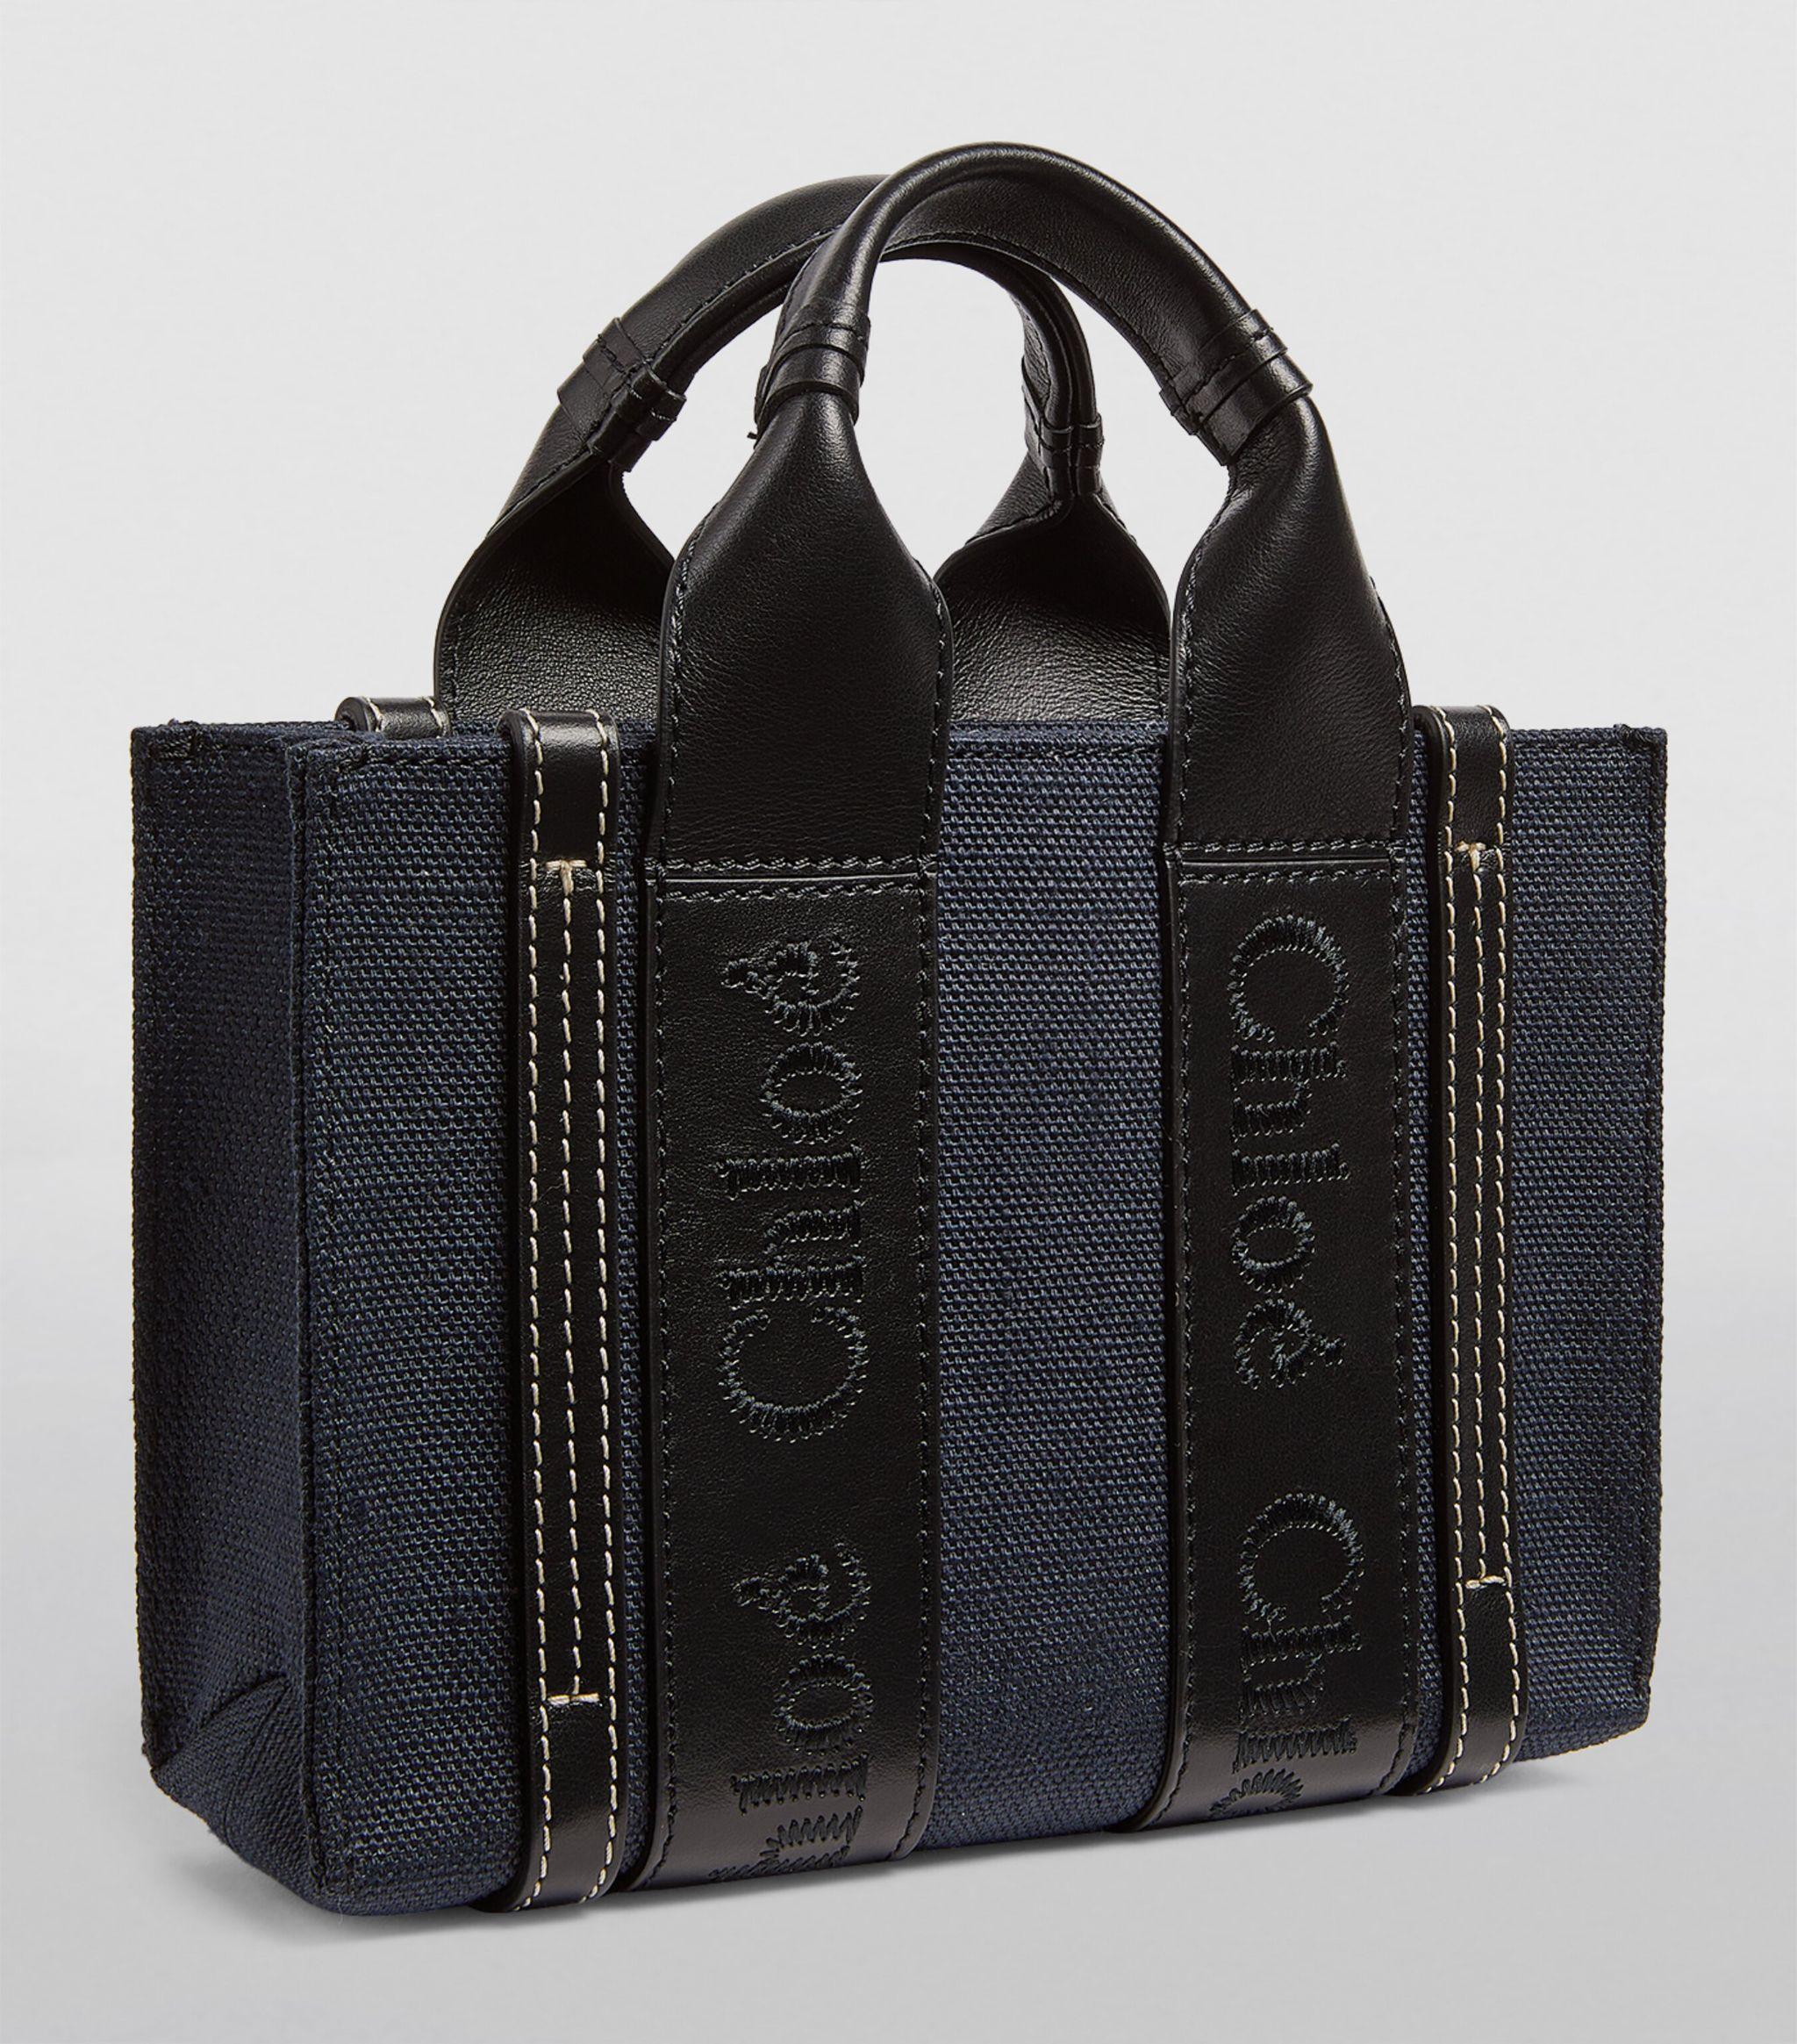 Ivory/Black Canvas Resort Bag, Tote Handbag